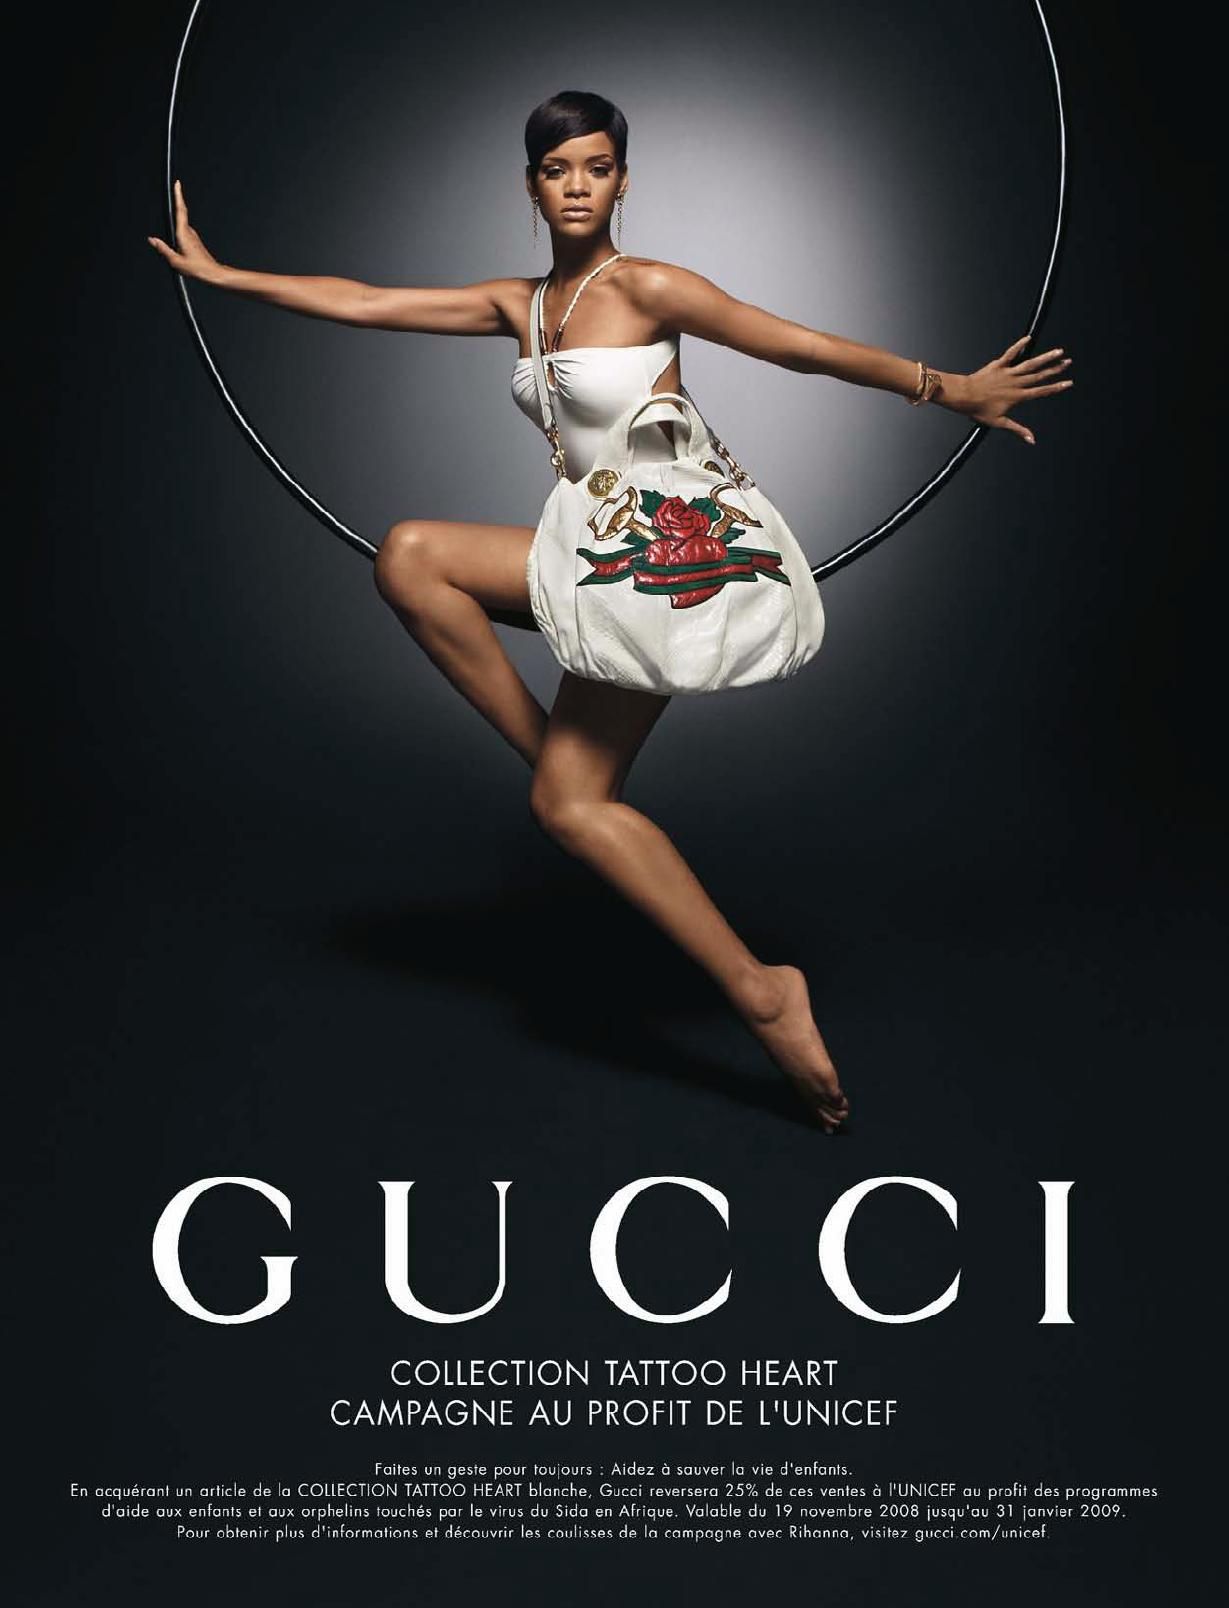 Rihanna in Gucci's Tattoo Heart Campaign 2008